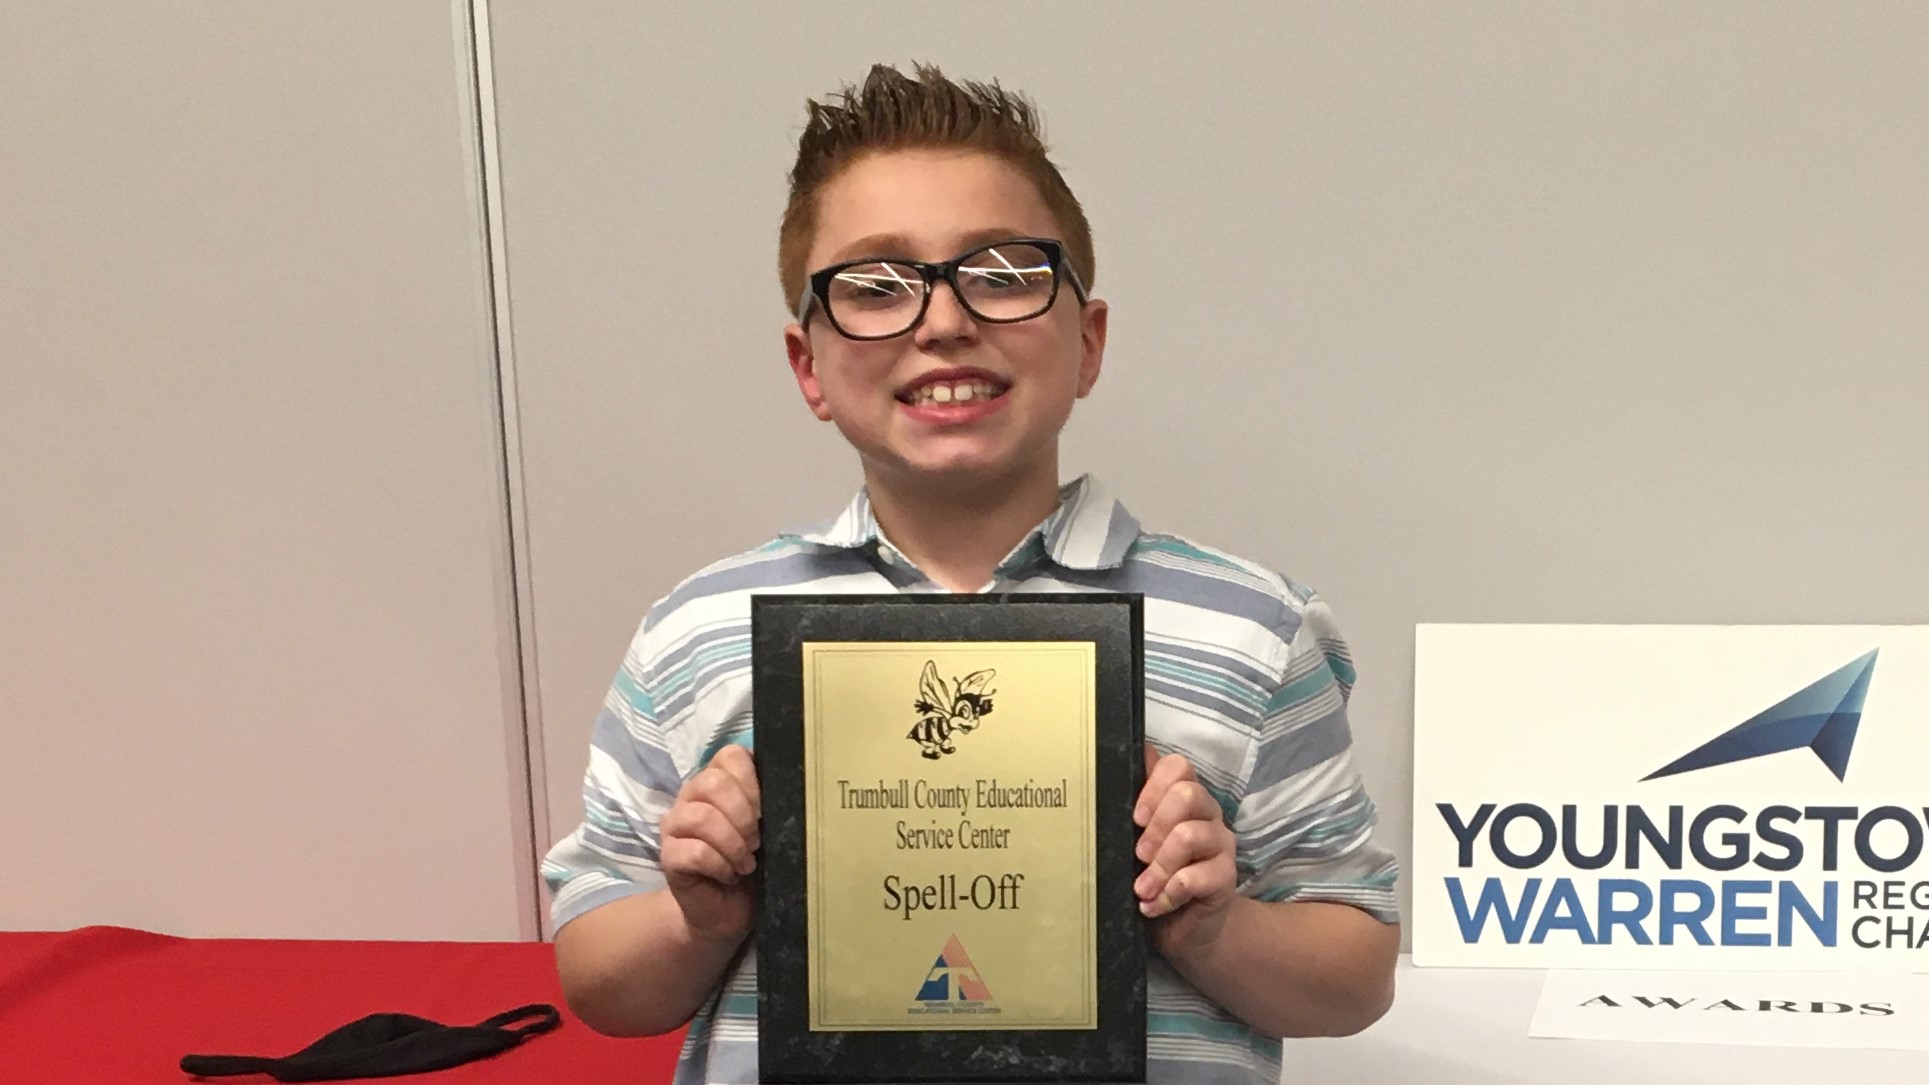 5th grade boy holding a plaque